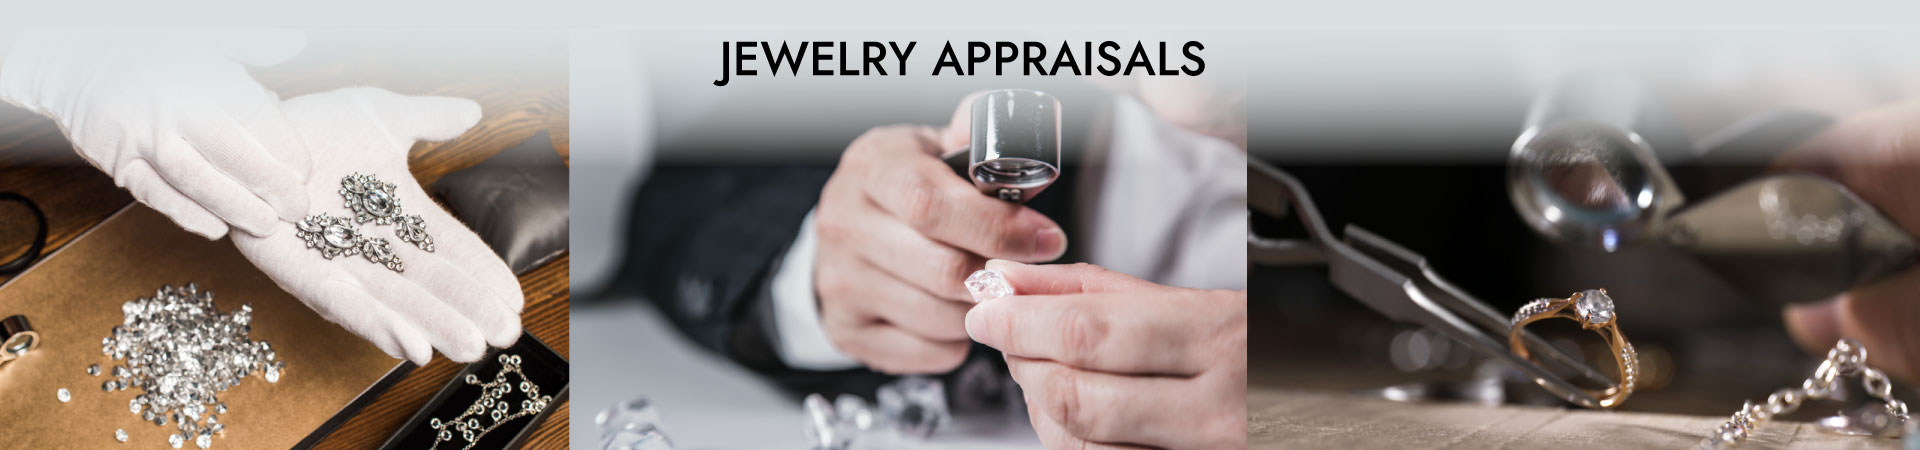 Jewelry Appraisals O'Fallon